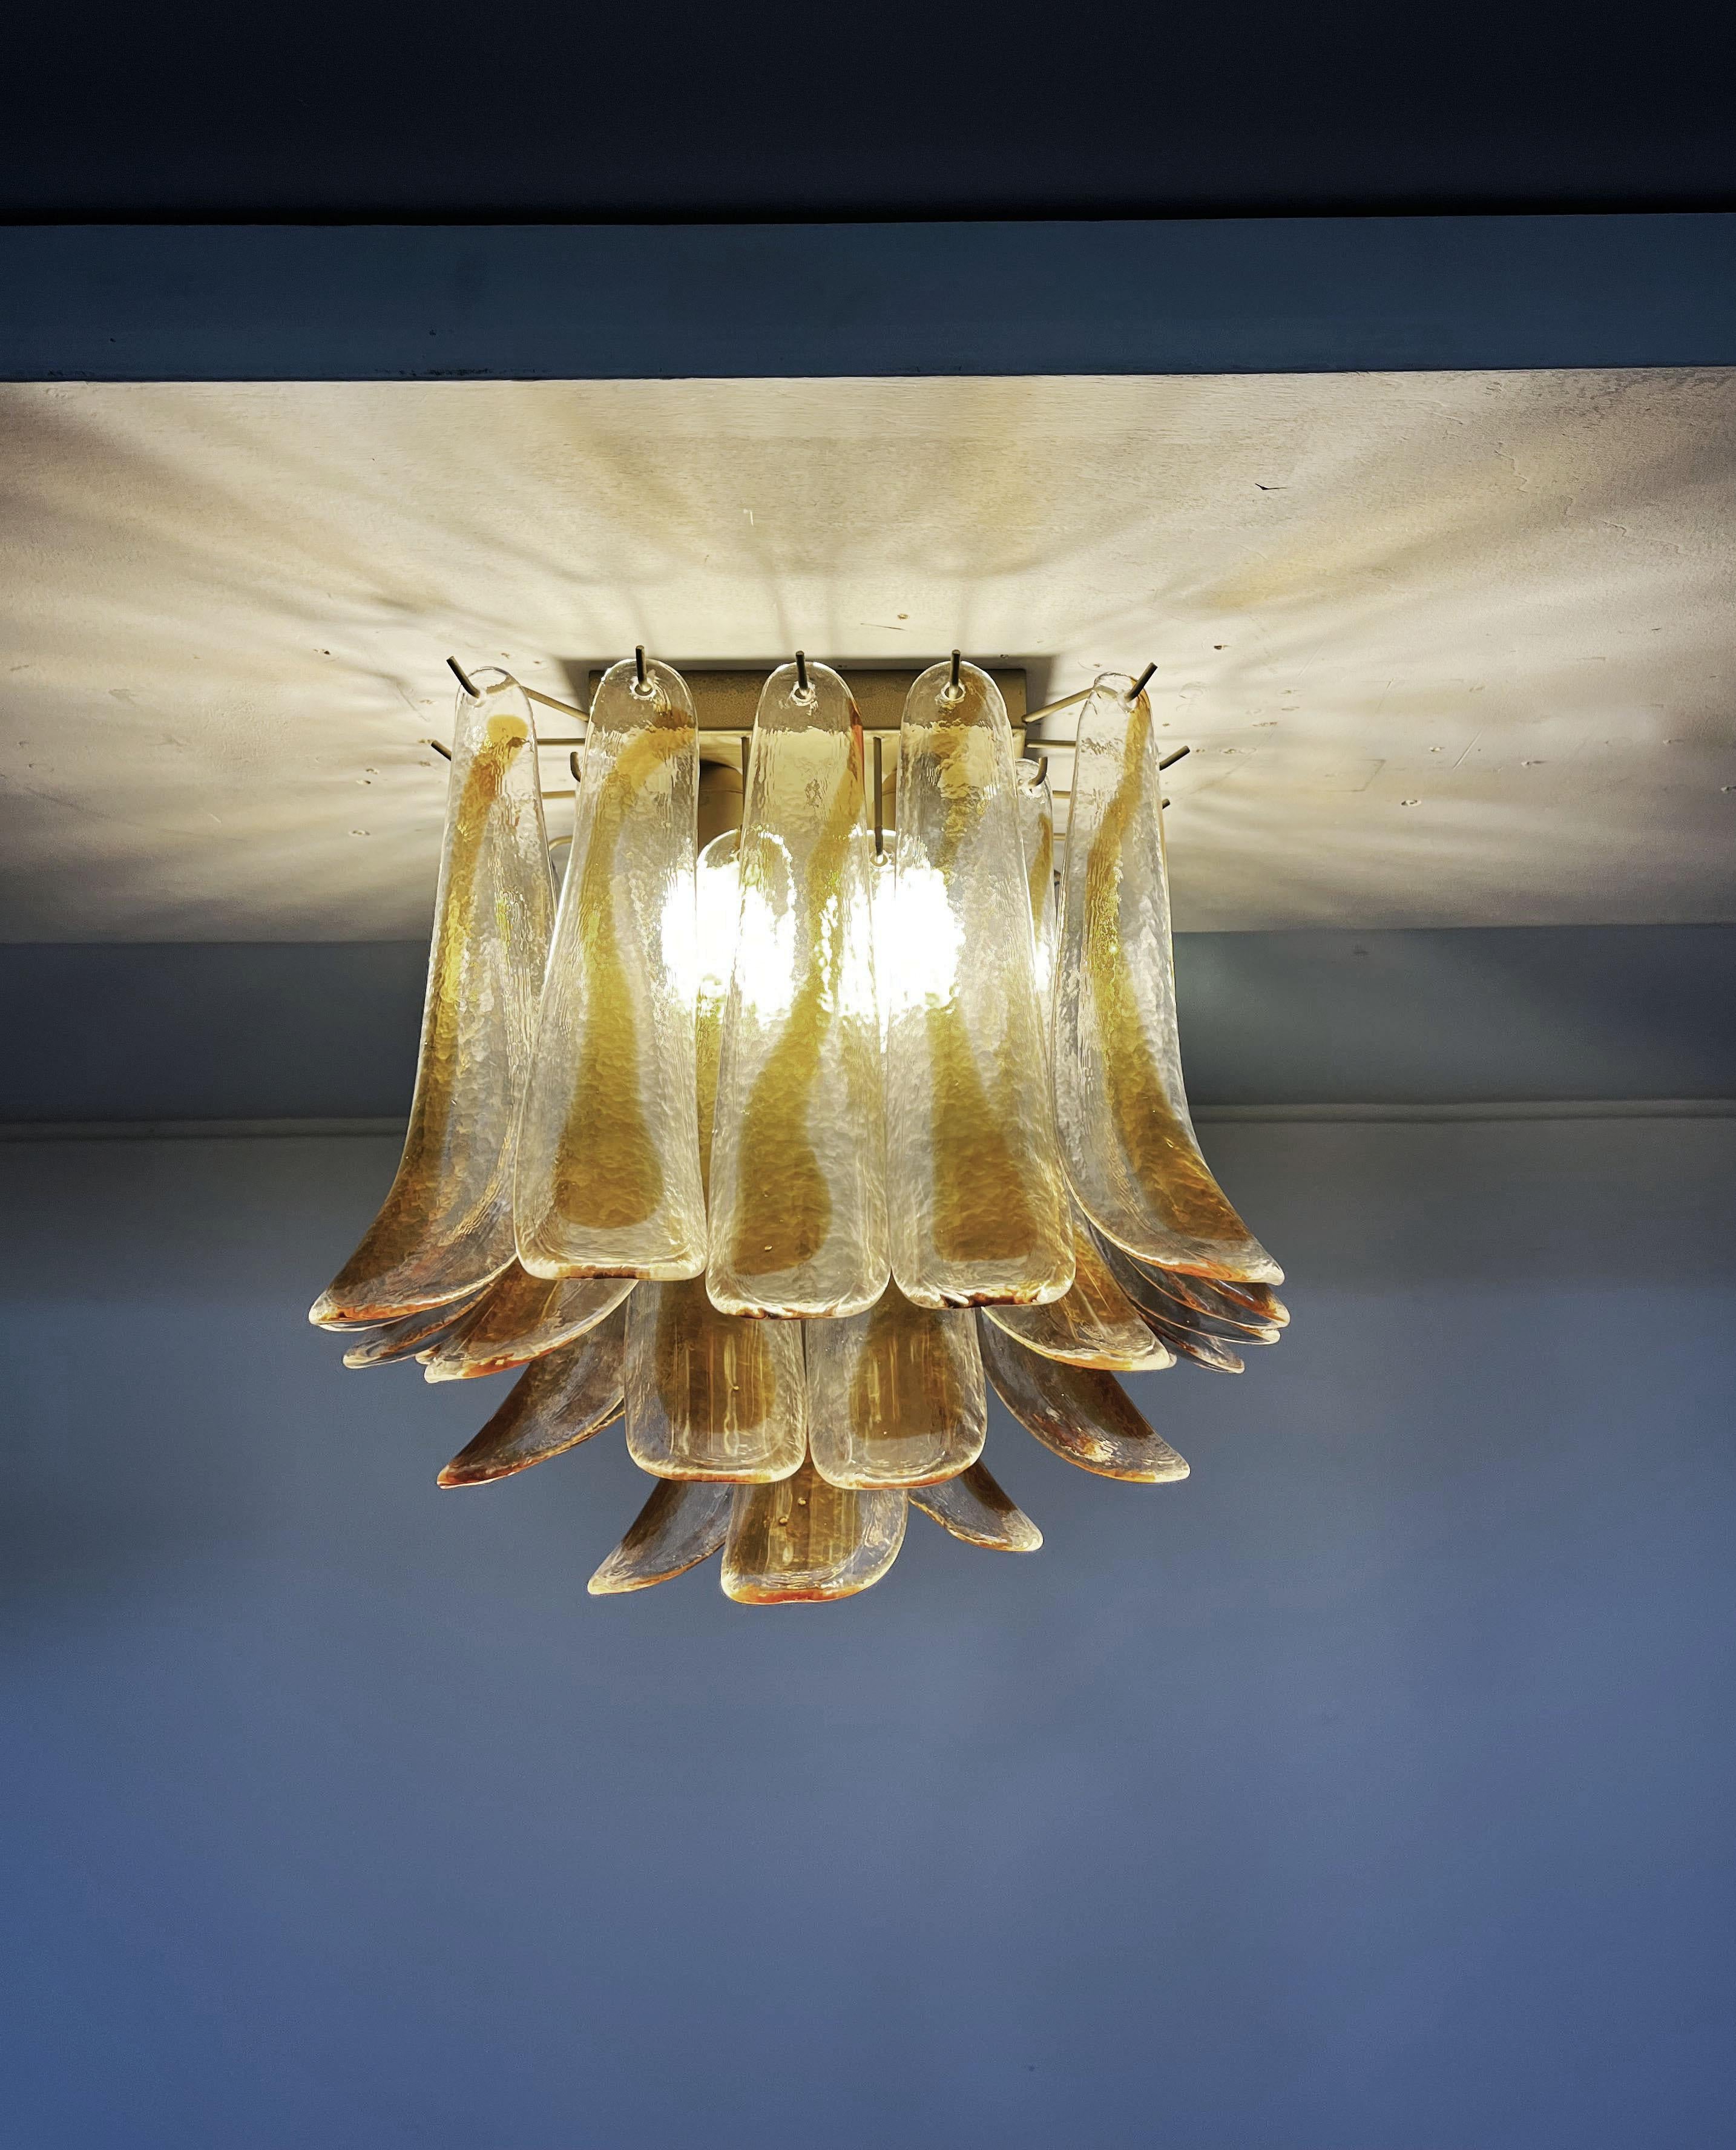 Murano Ceiling Lamp, 32 Amber and Clear Glass Petals In Good Condition For Sale In Gaiarine Frazione Francenigo (TV), IT